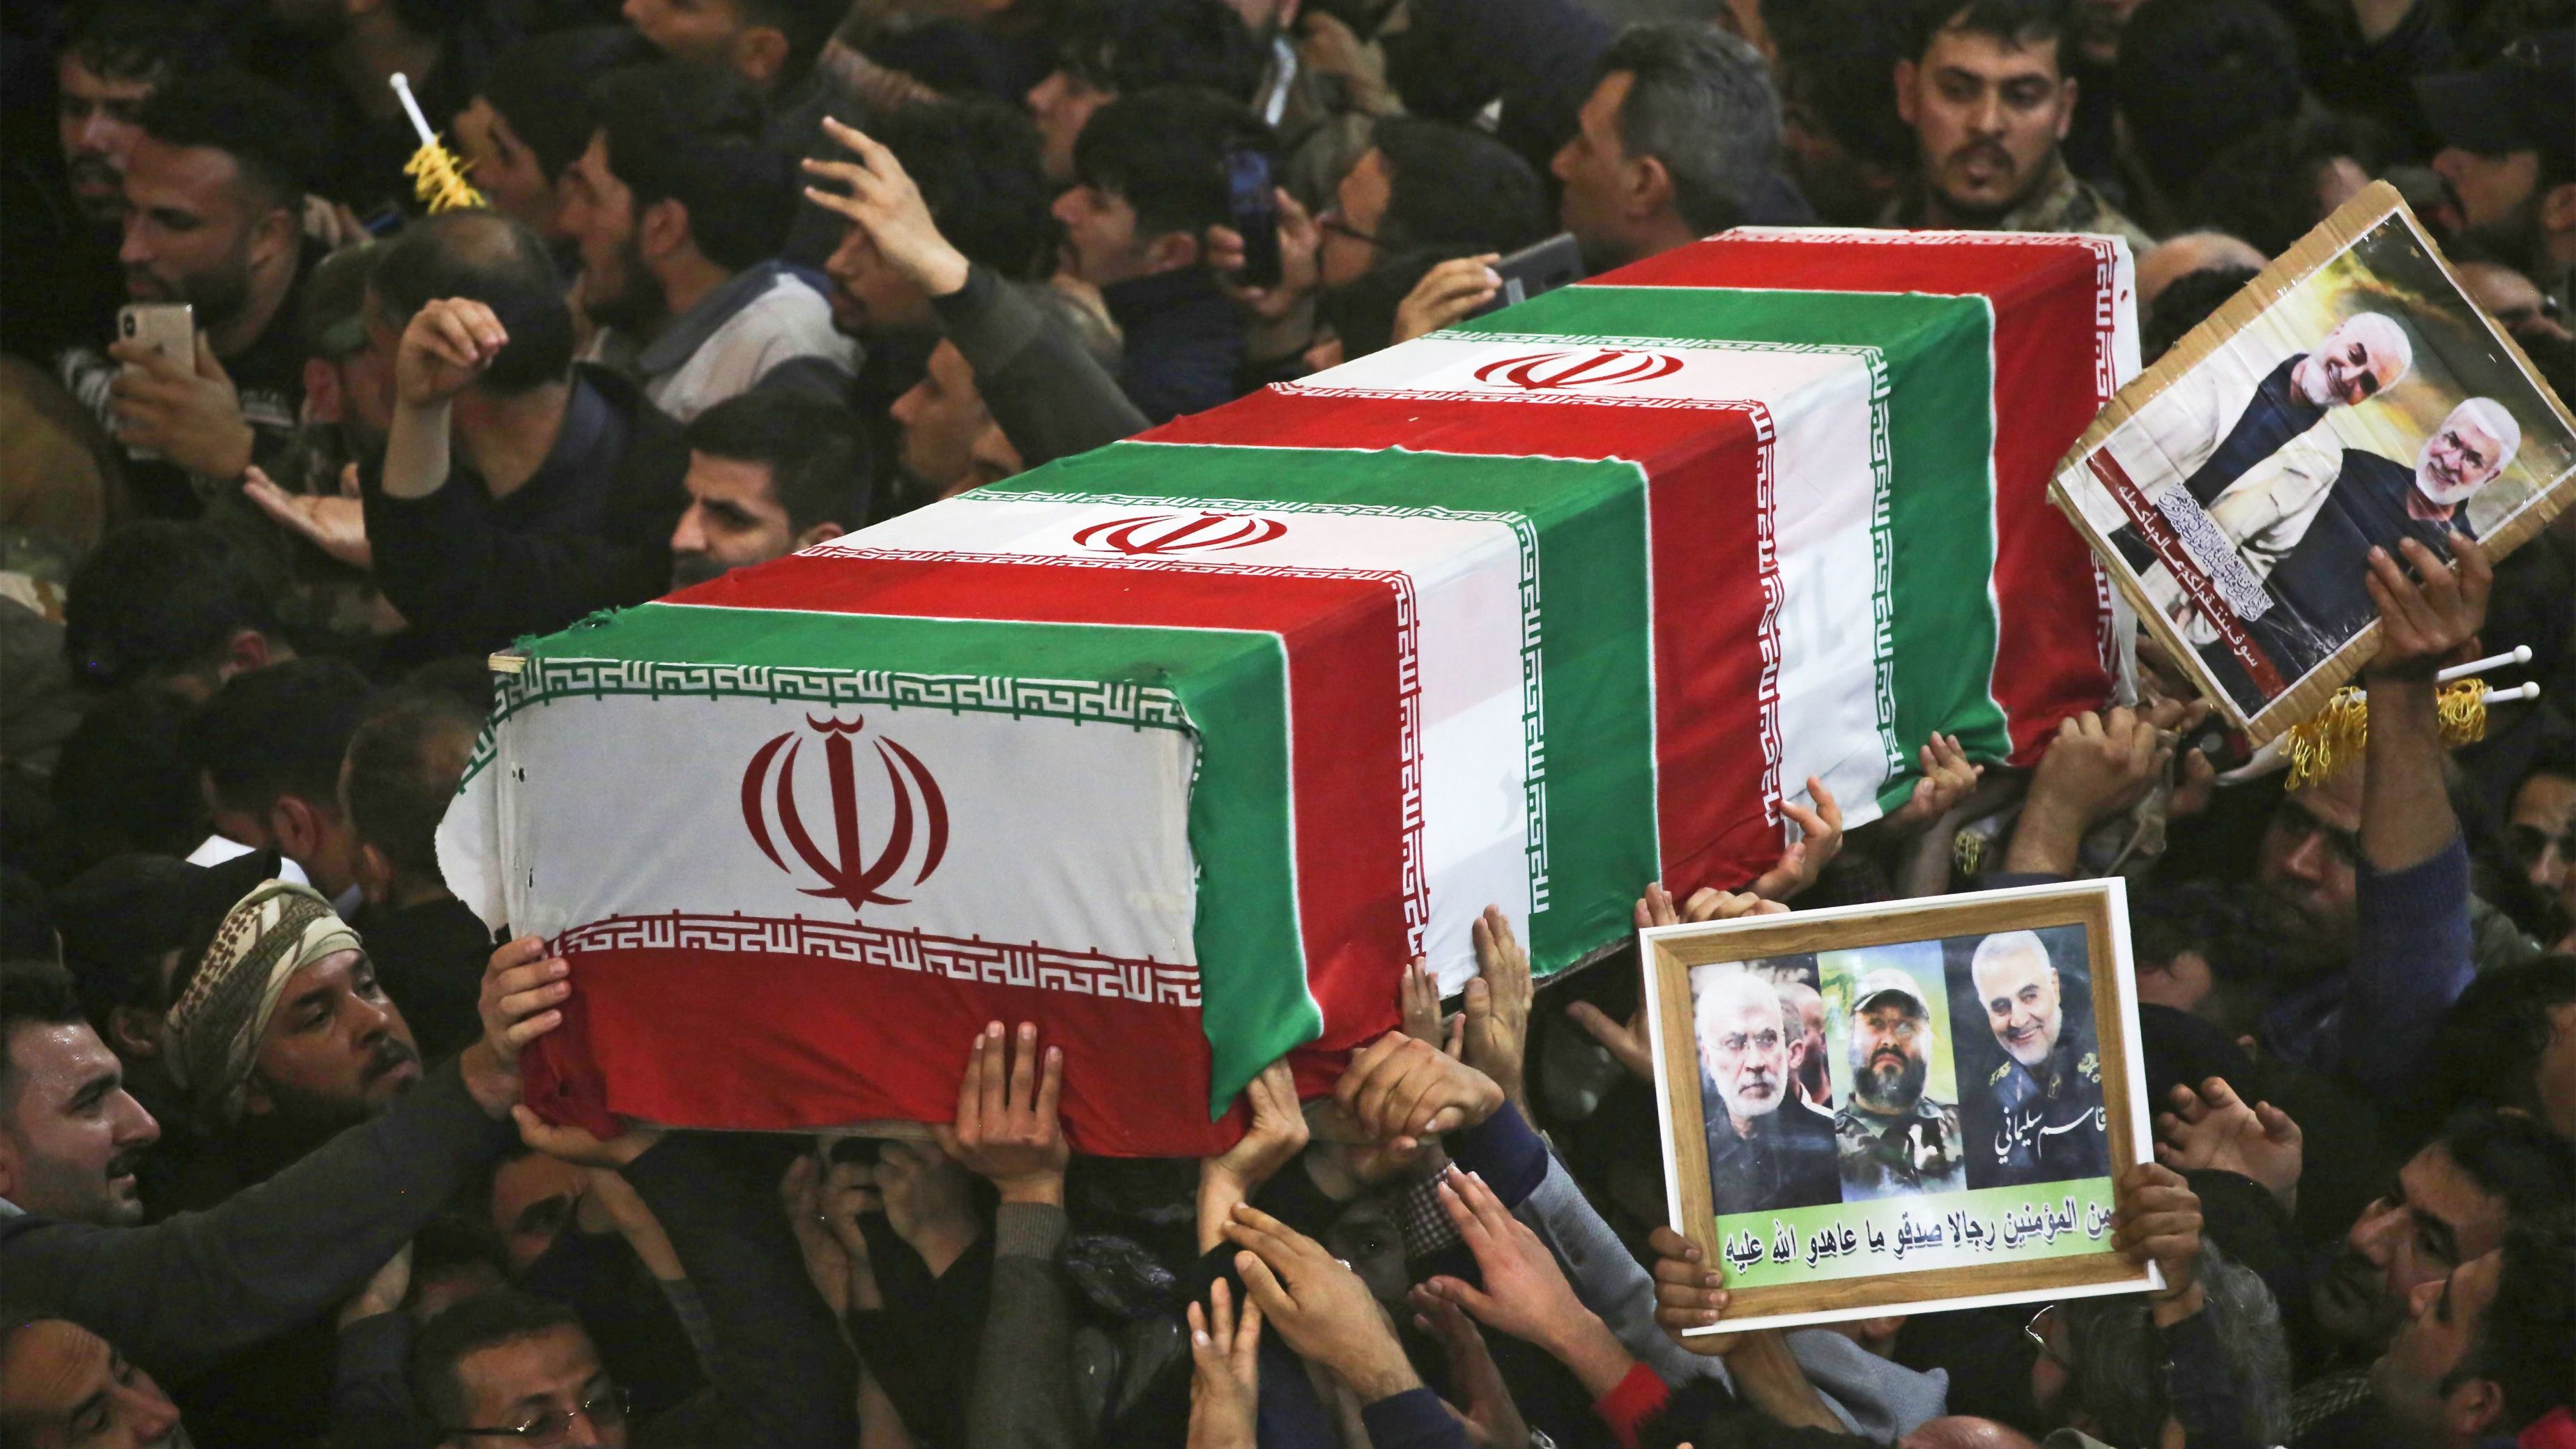 Burying Iran’s Pride together with Soleimani